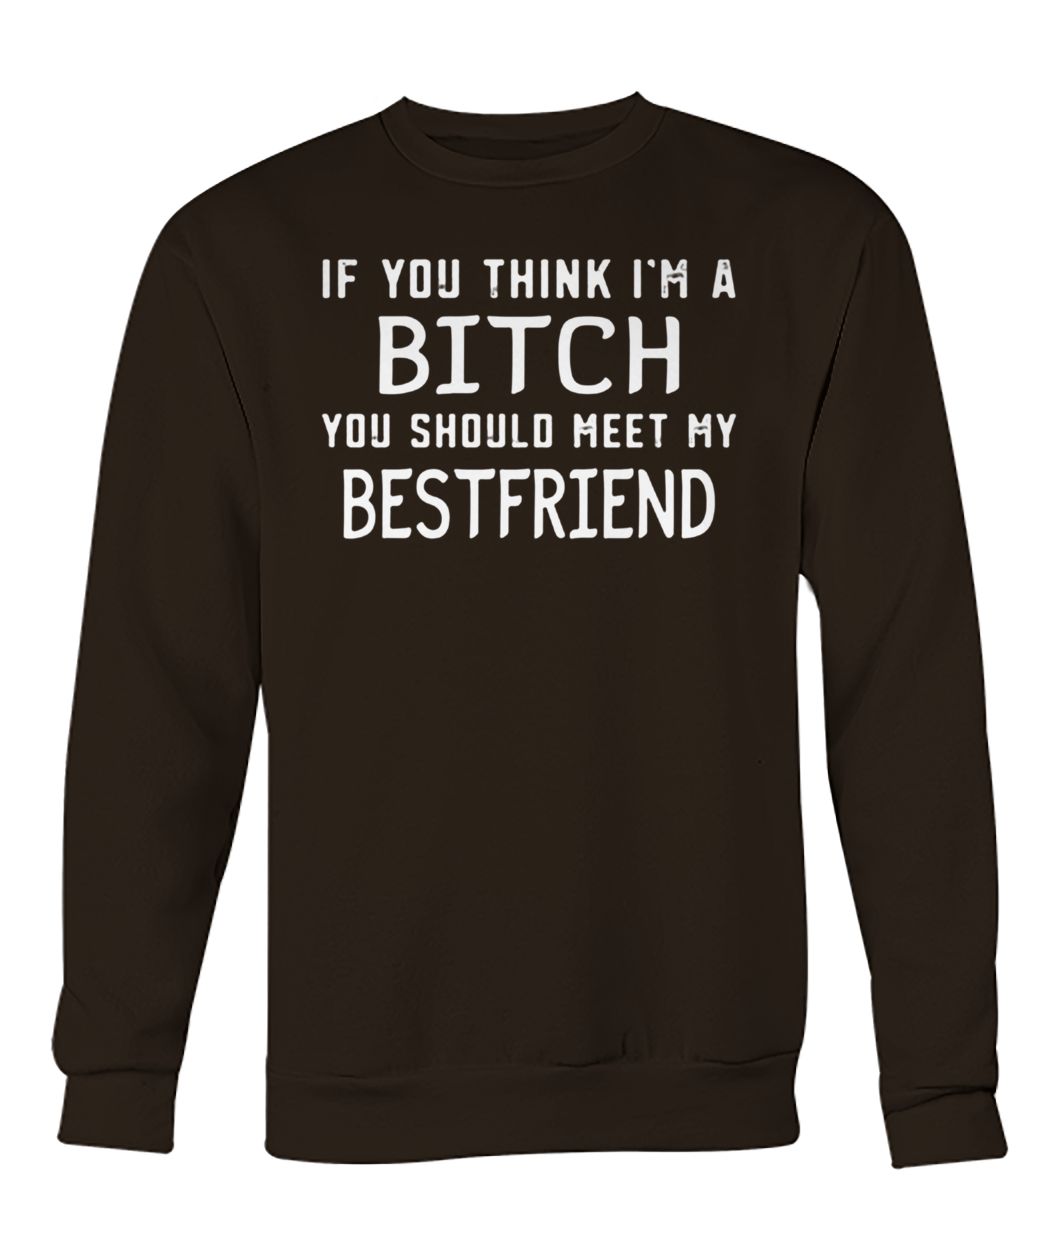 If you think I'm a bitch you should meet my bestfriend crew neck sweatshirt